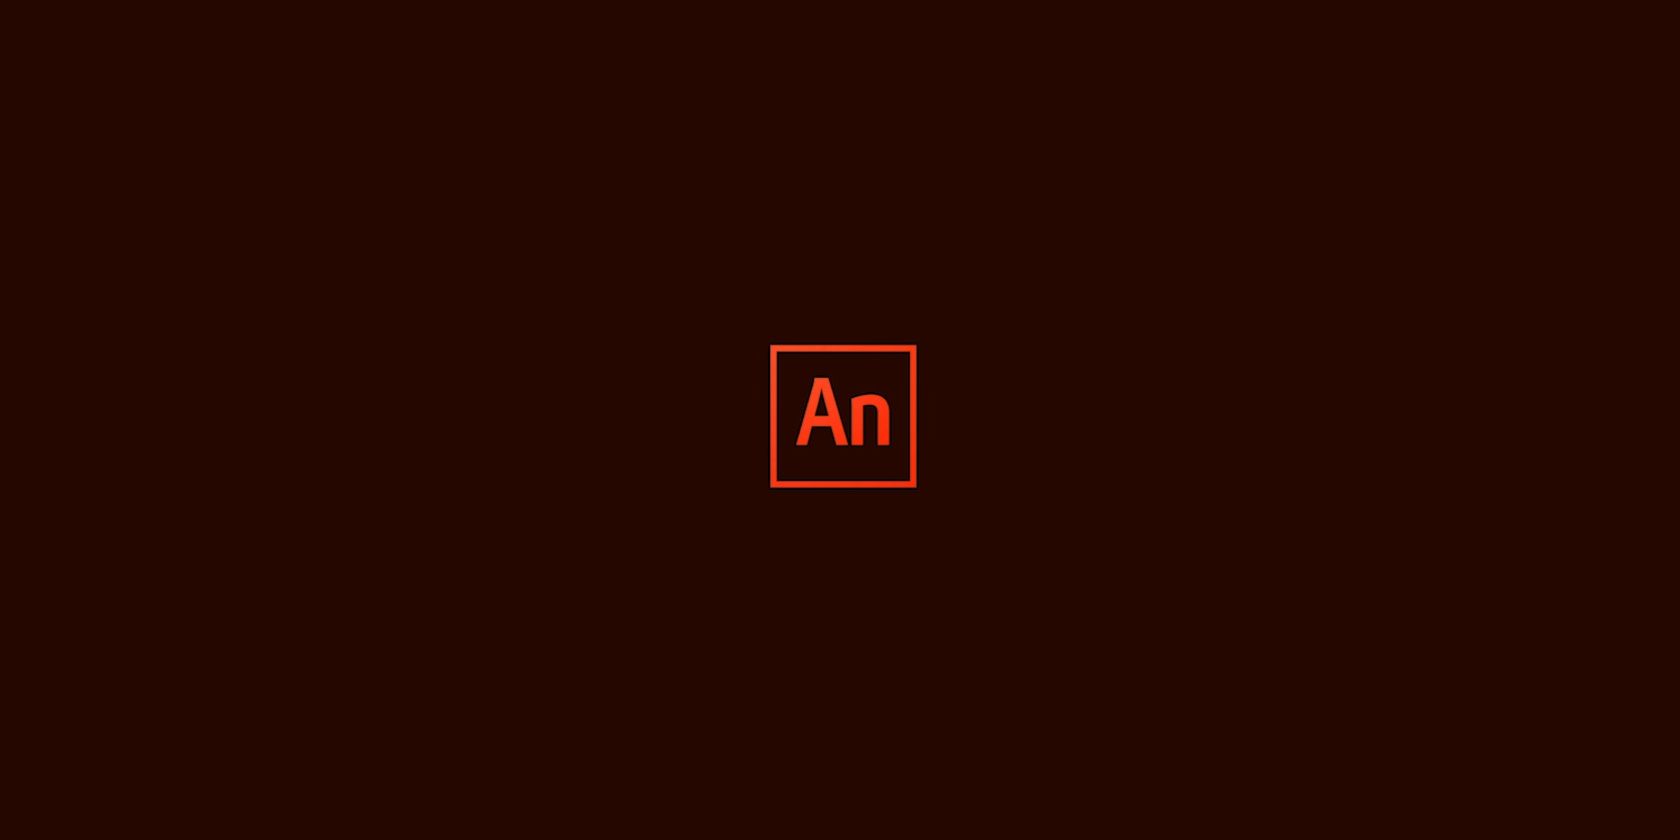 The Adobe Animate logo